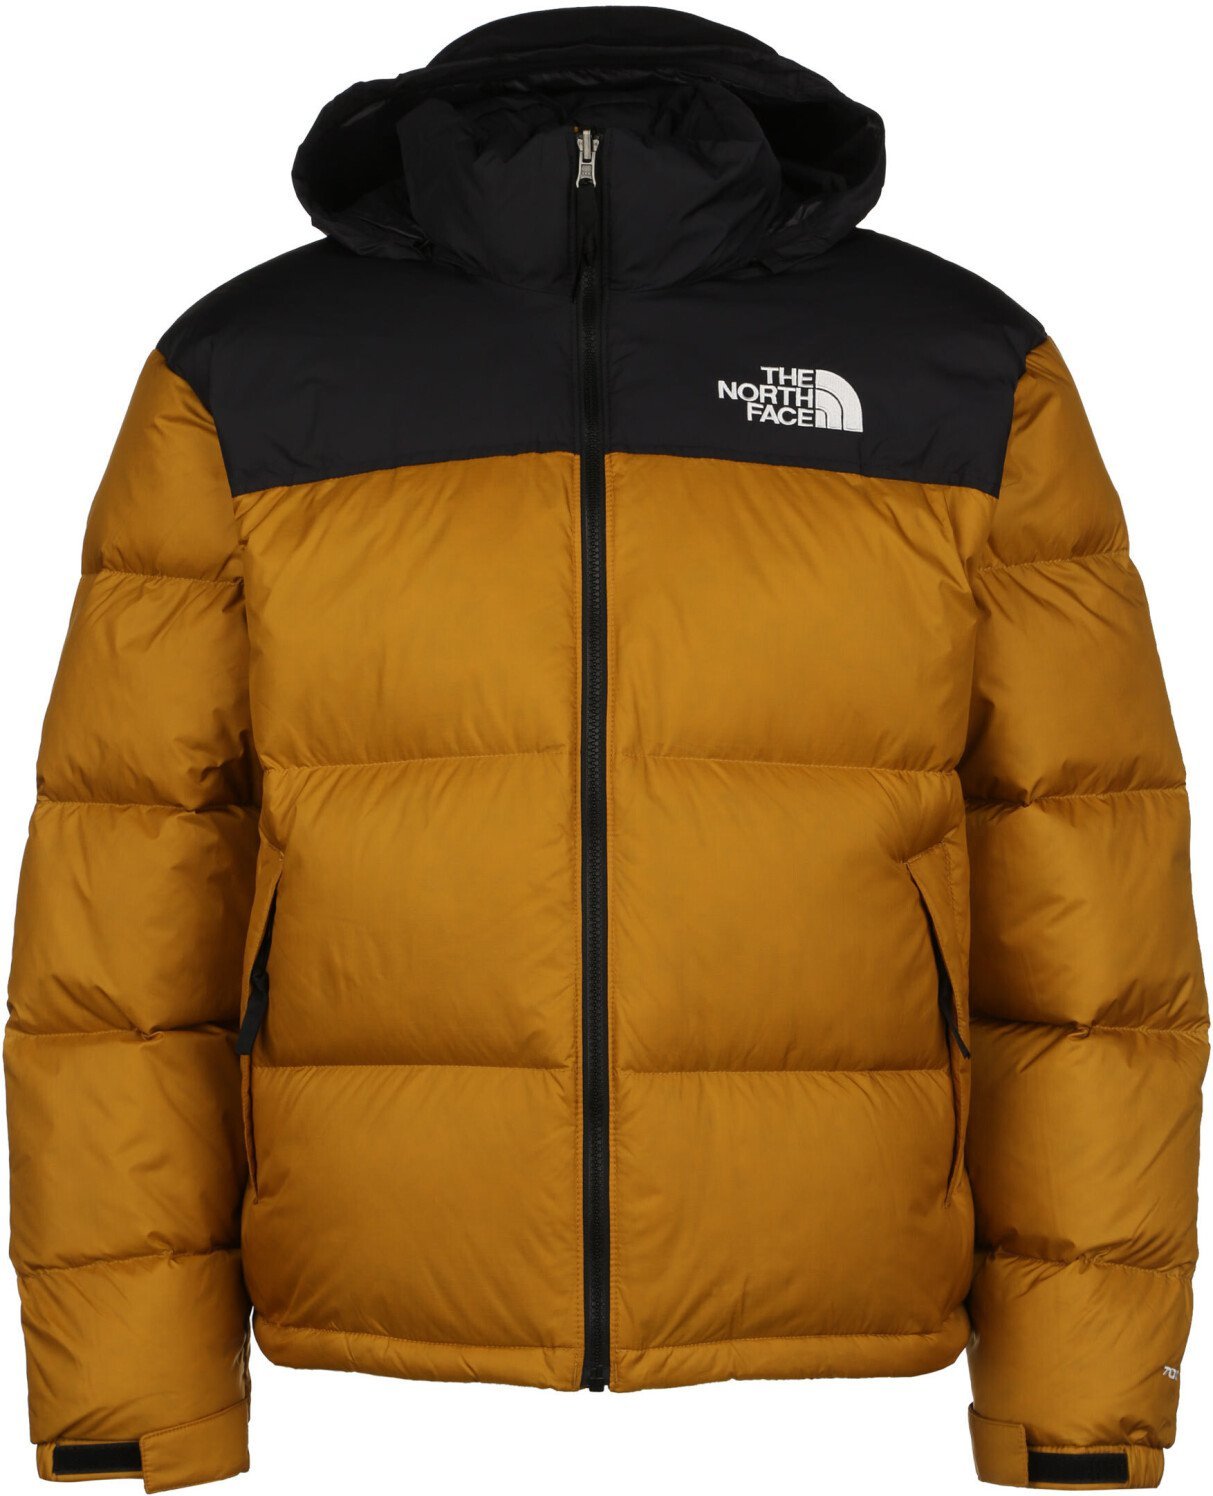 The North Face 1996 Retro Nuptse Jacket günstig kaufen